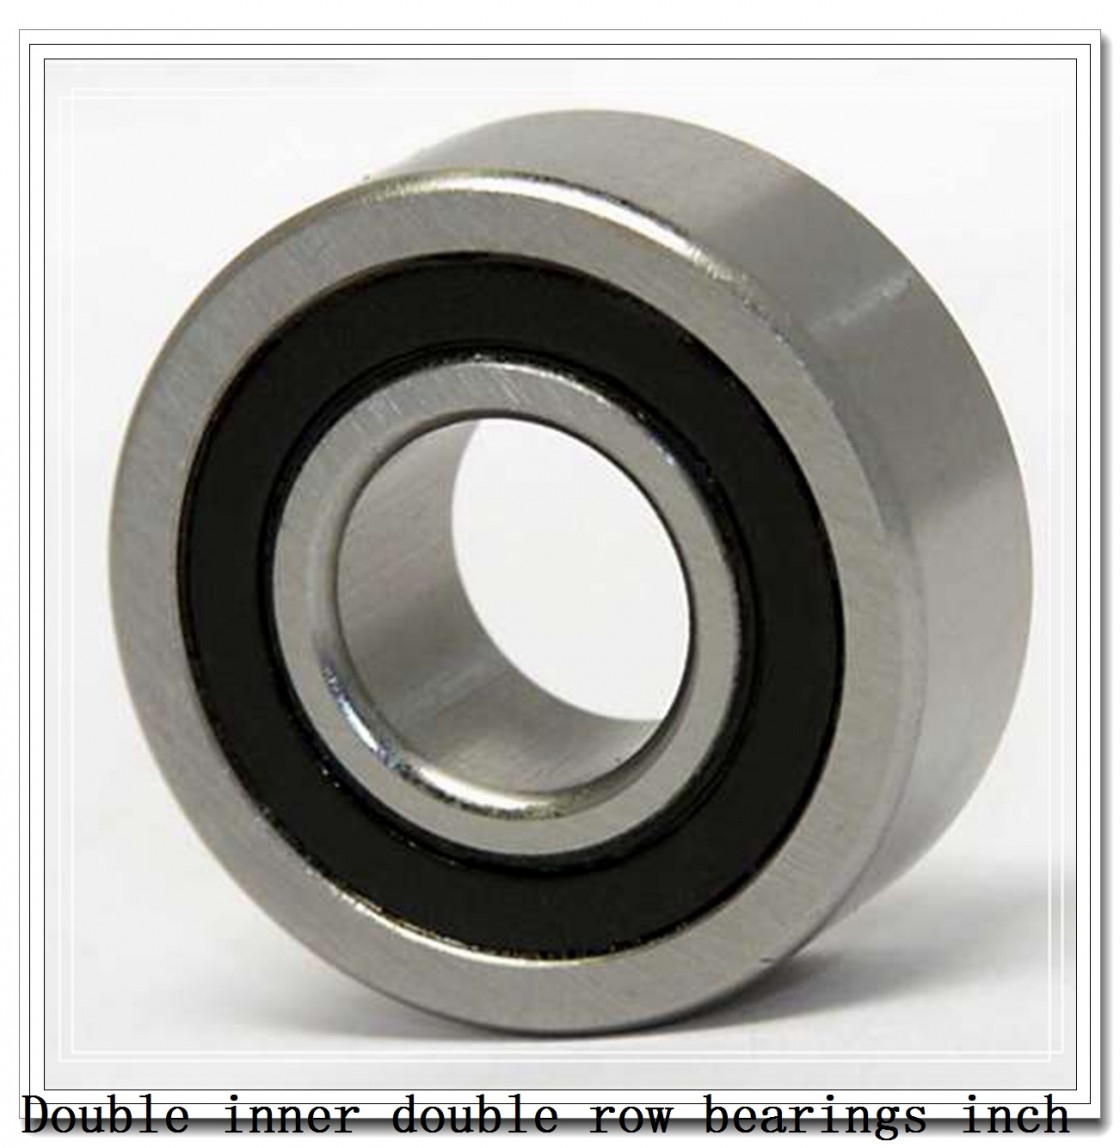 M276449/M276410DG2 Double inner double row bearings inch